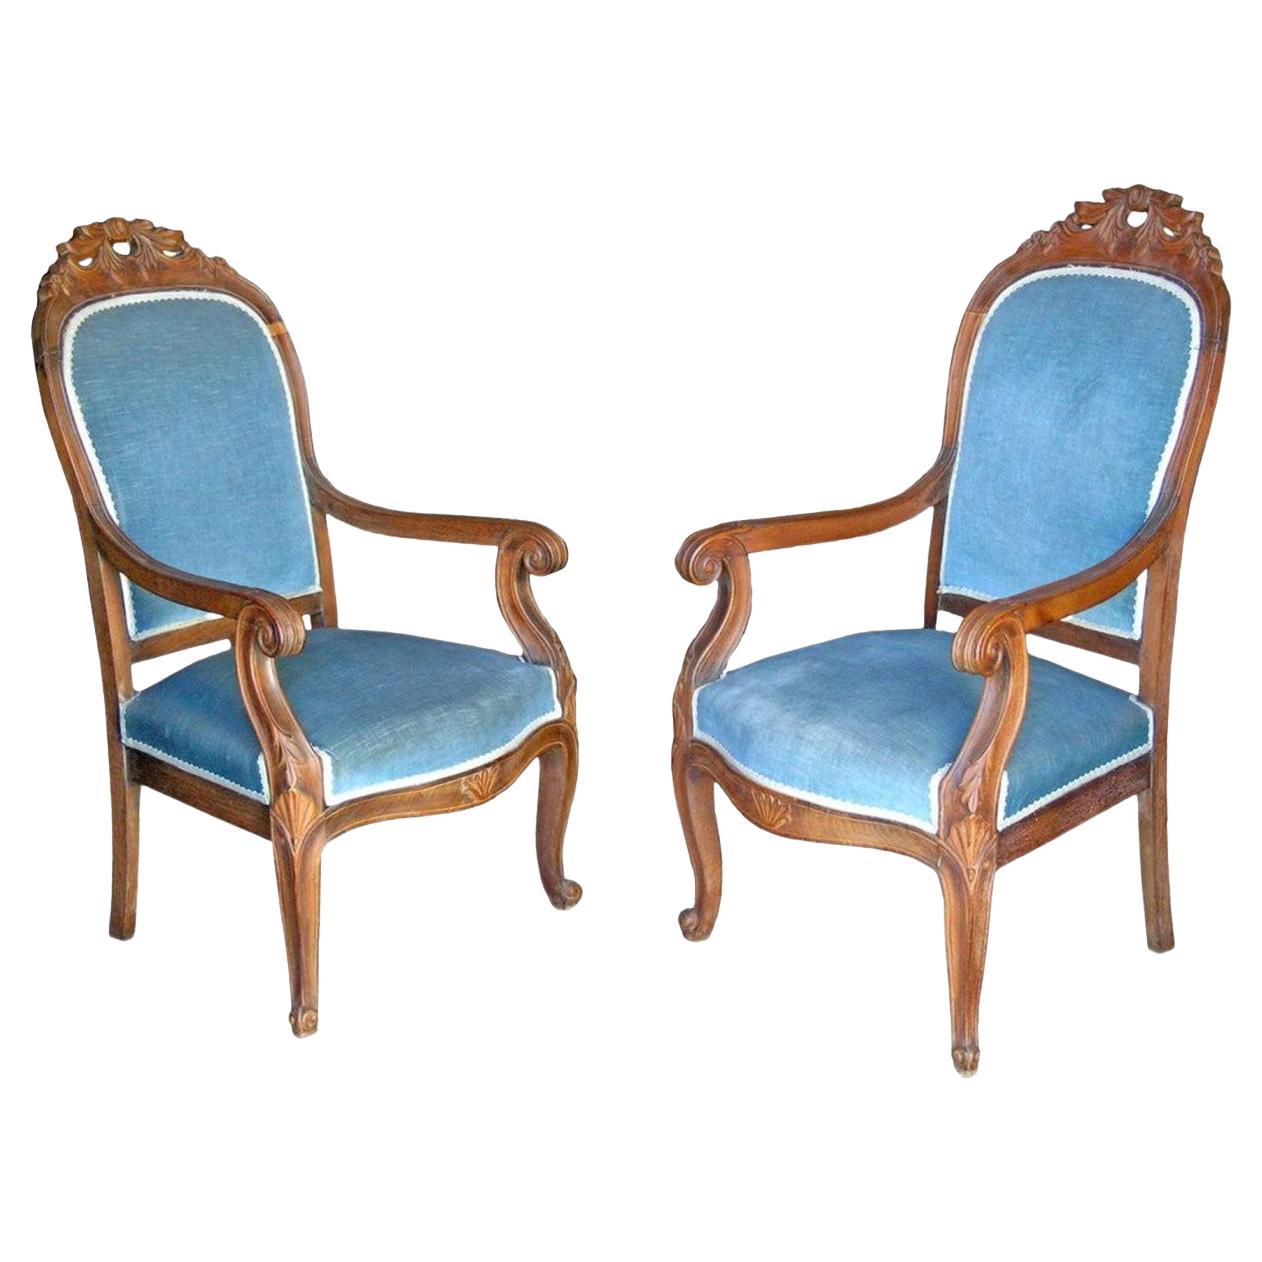  Paar Louis-Philippe-Sessel aus Nussbaumholz - um 1860